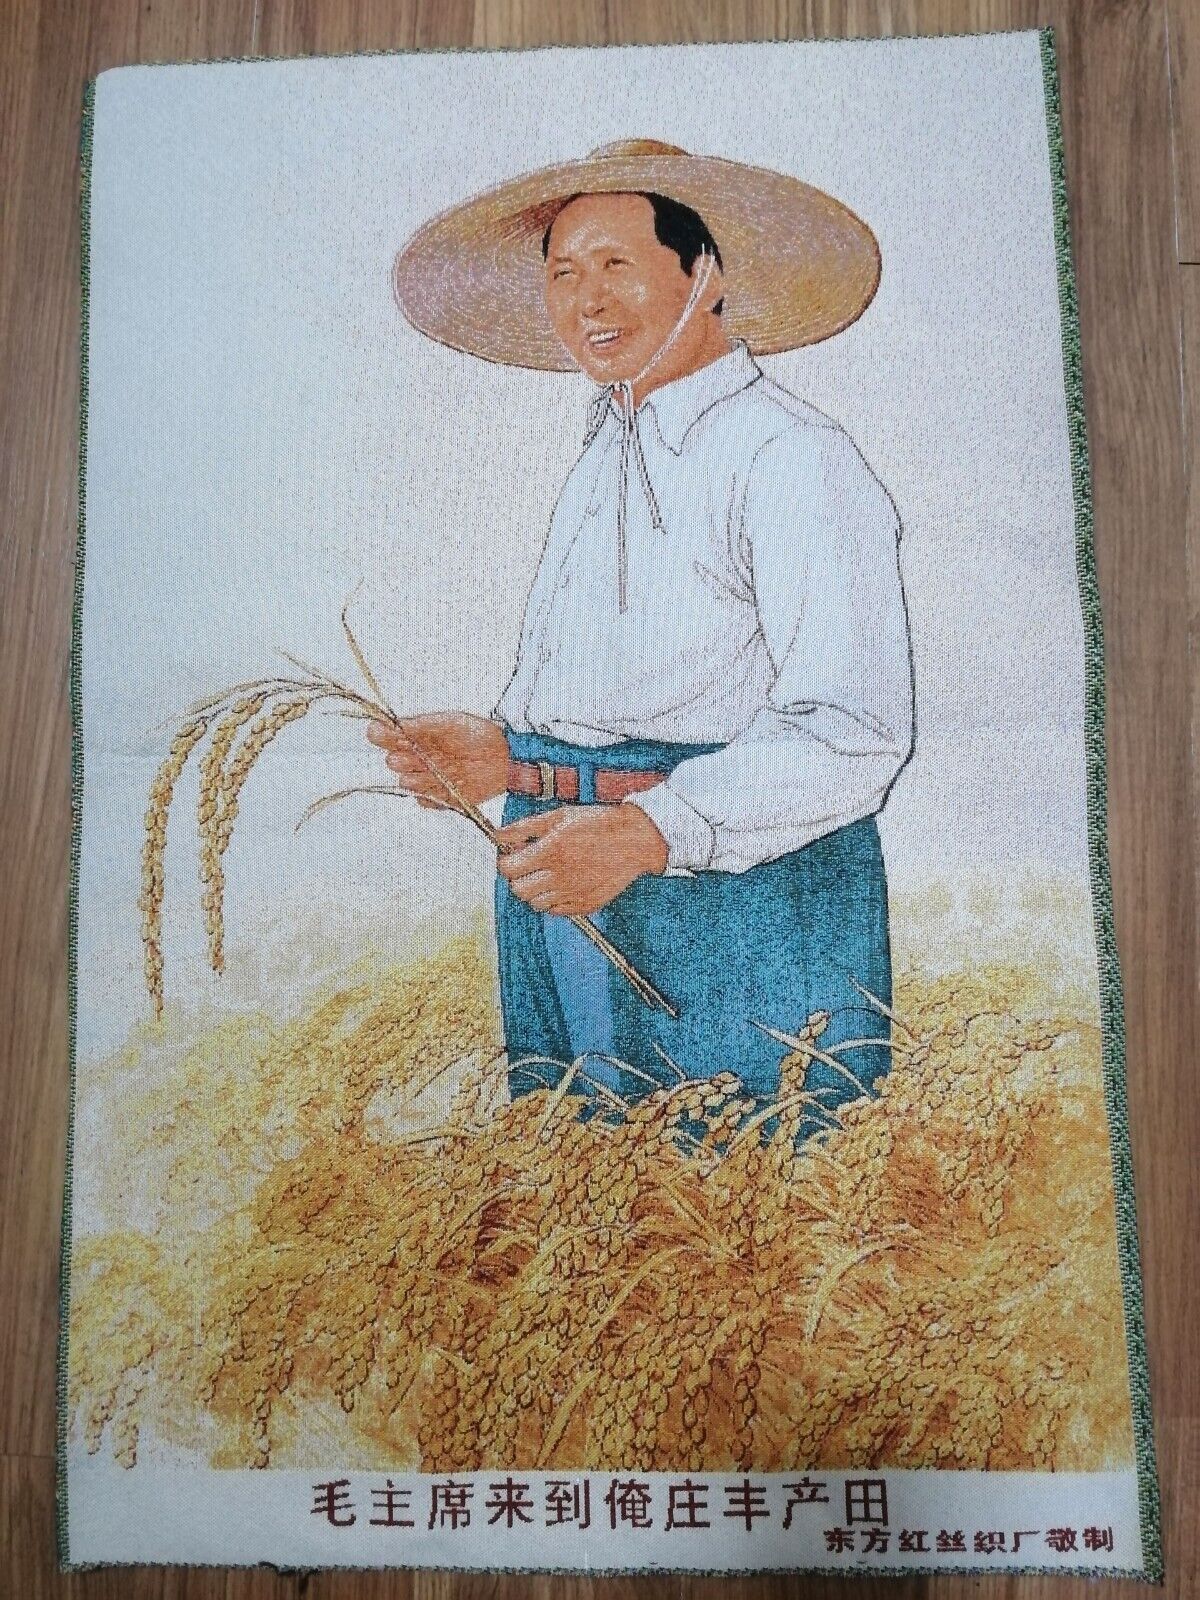 Chinese Communist Cultural Revolution Chairman Mao Embroidery Propaganda Poster